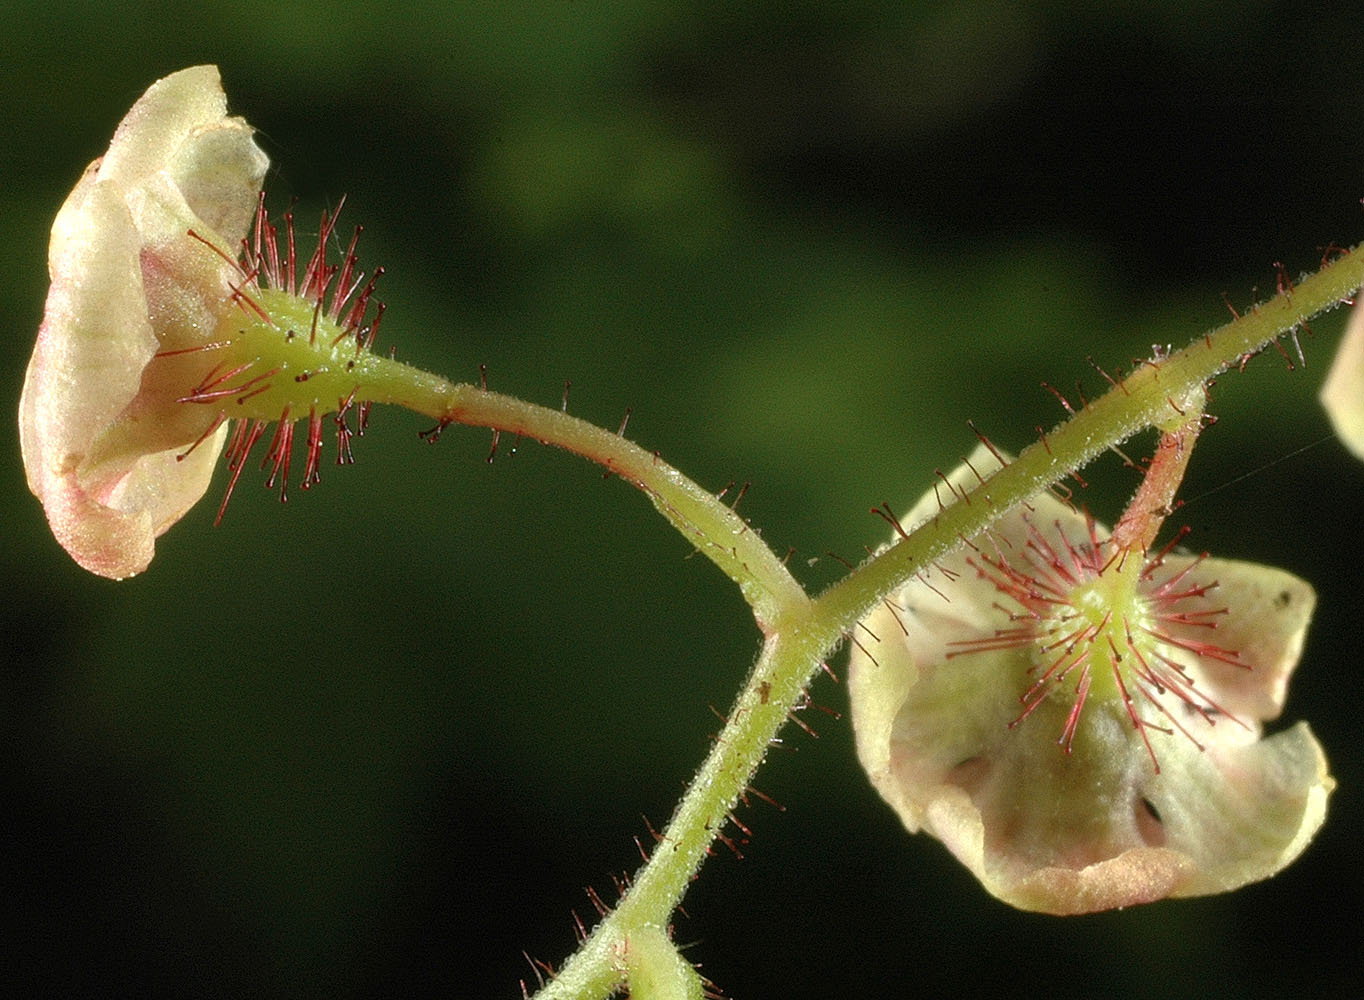 Flora of Eastern Washington Image: Ribes lacustre